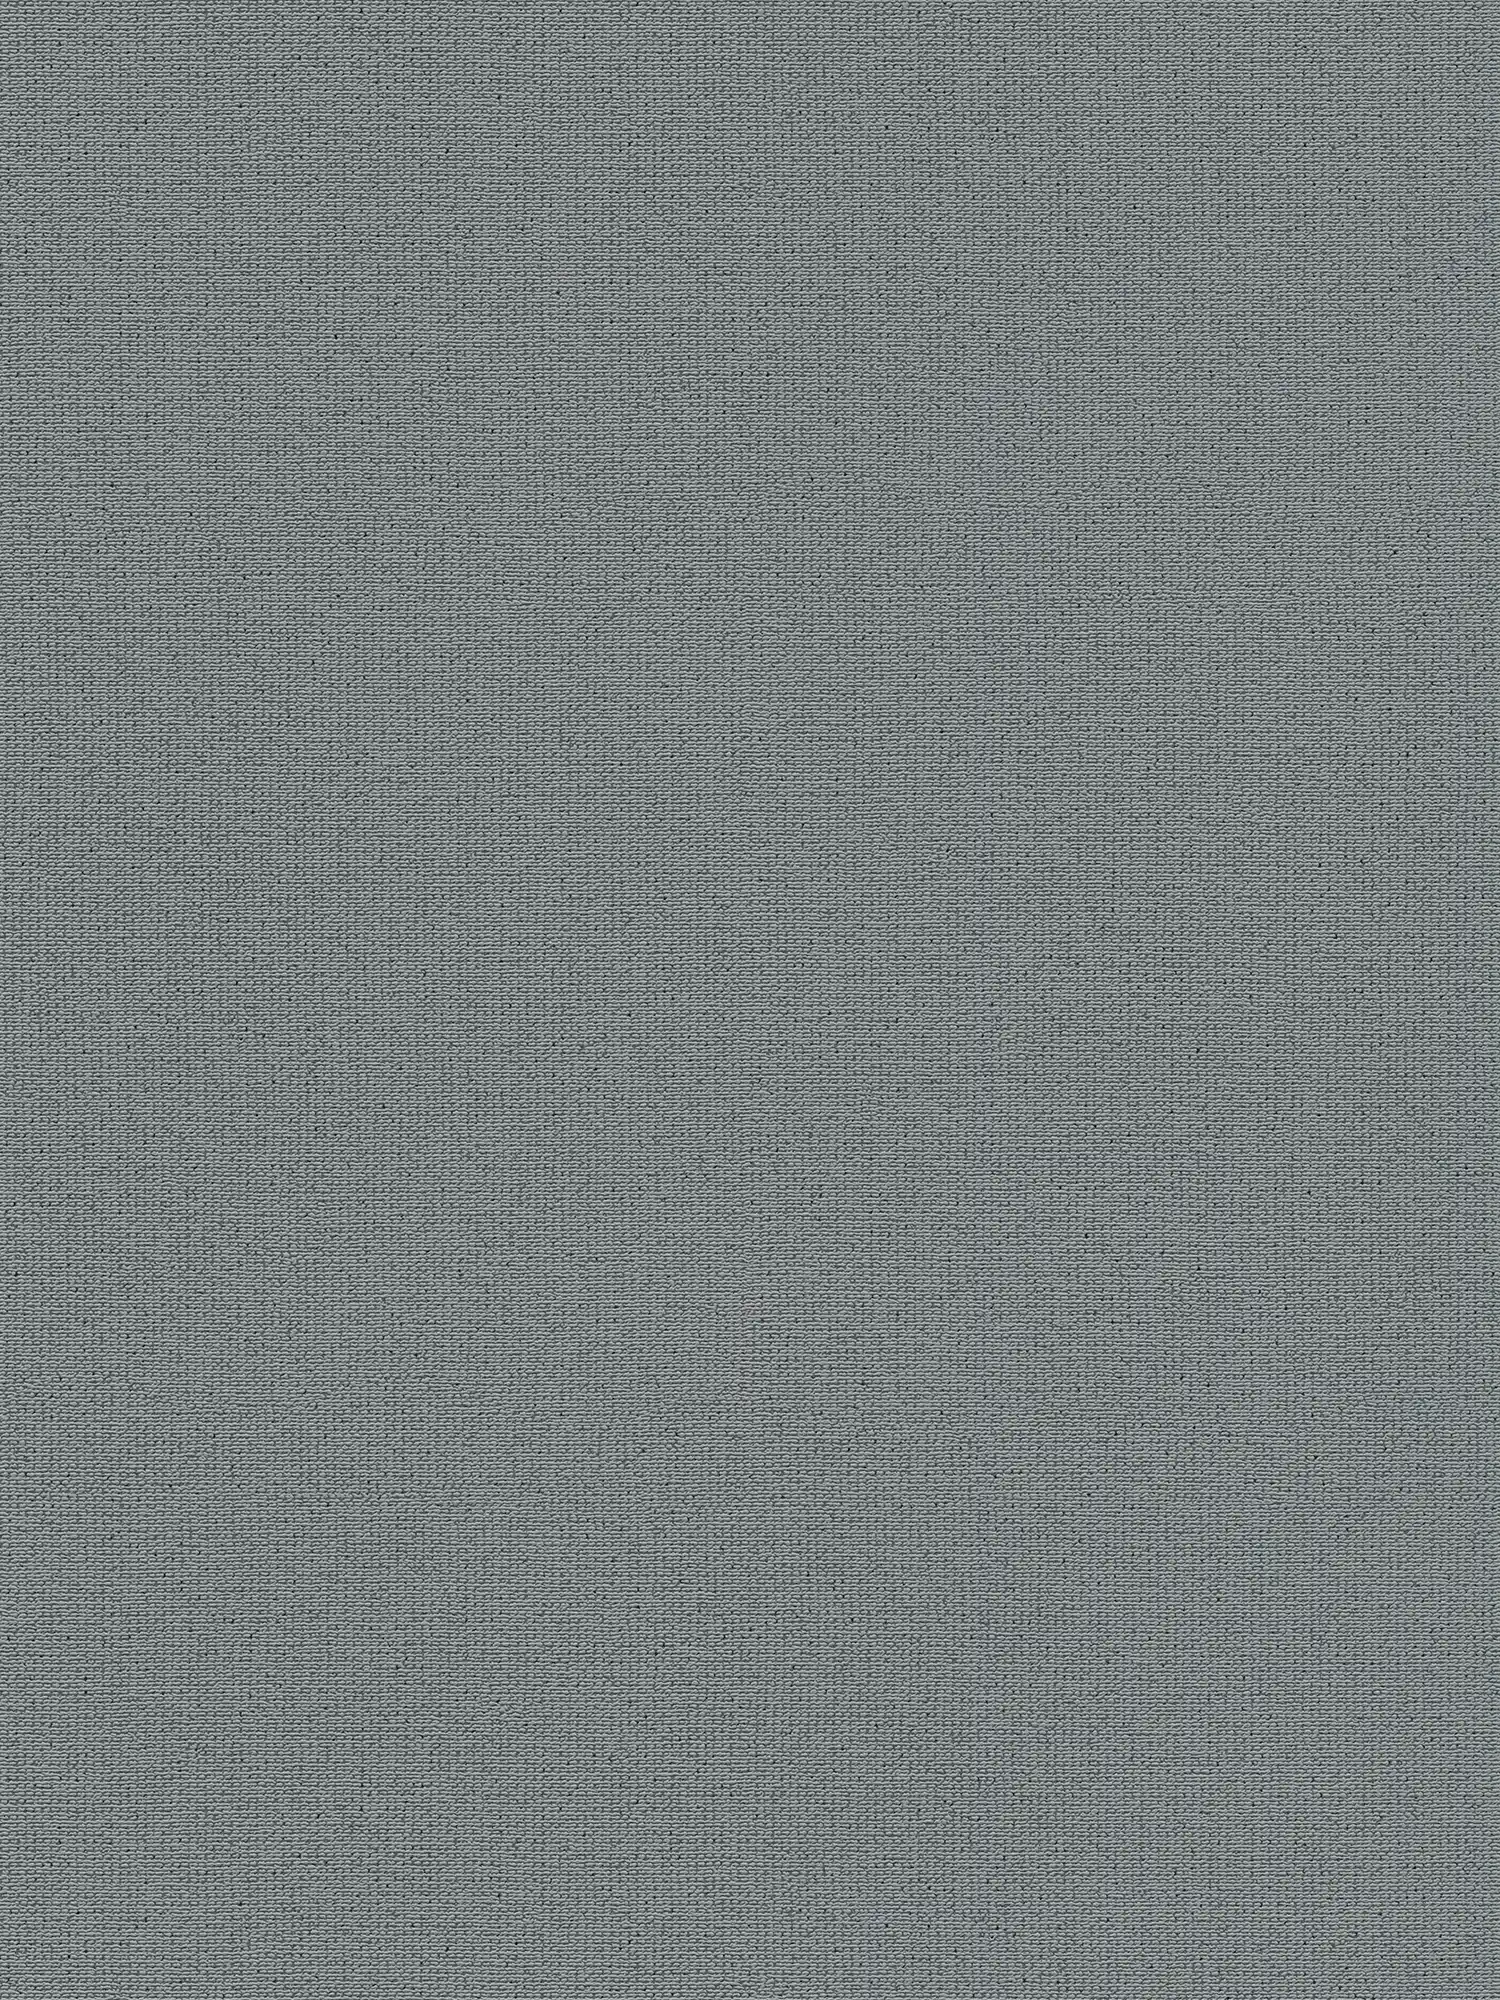 Papel pintado escandinavo liso en estructura mate y lino - gris oscuro
